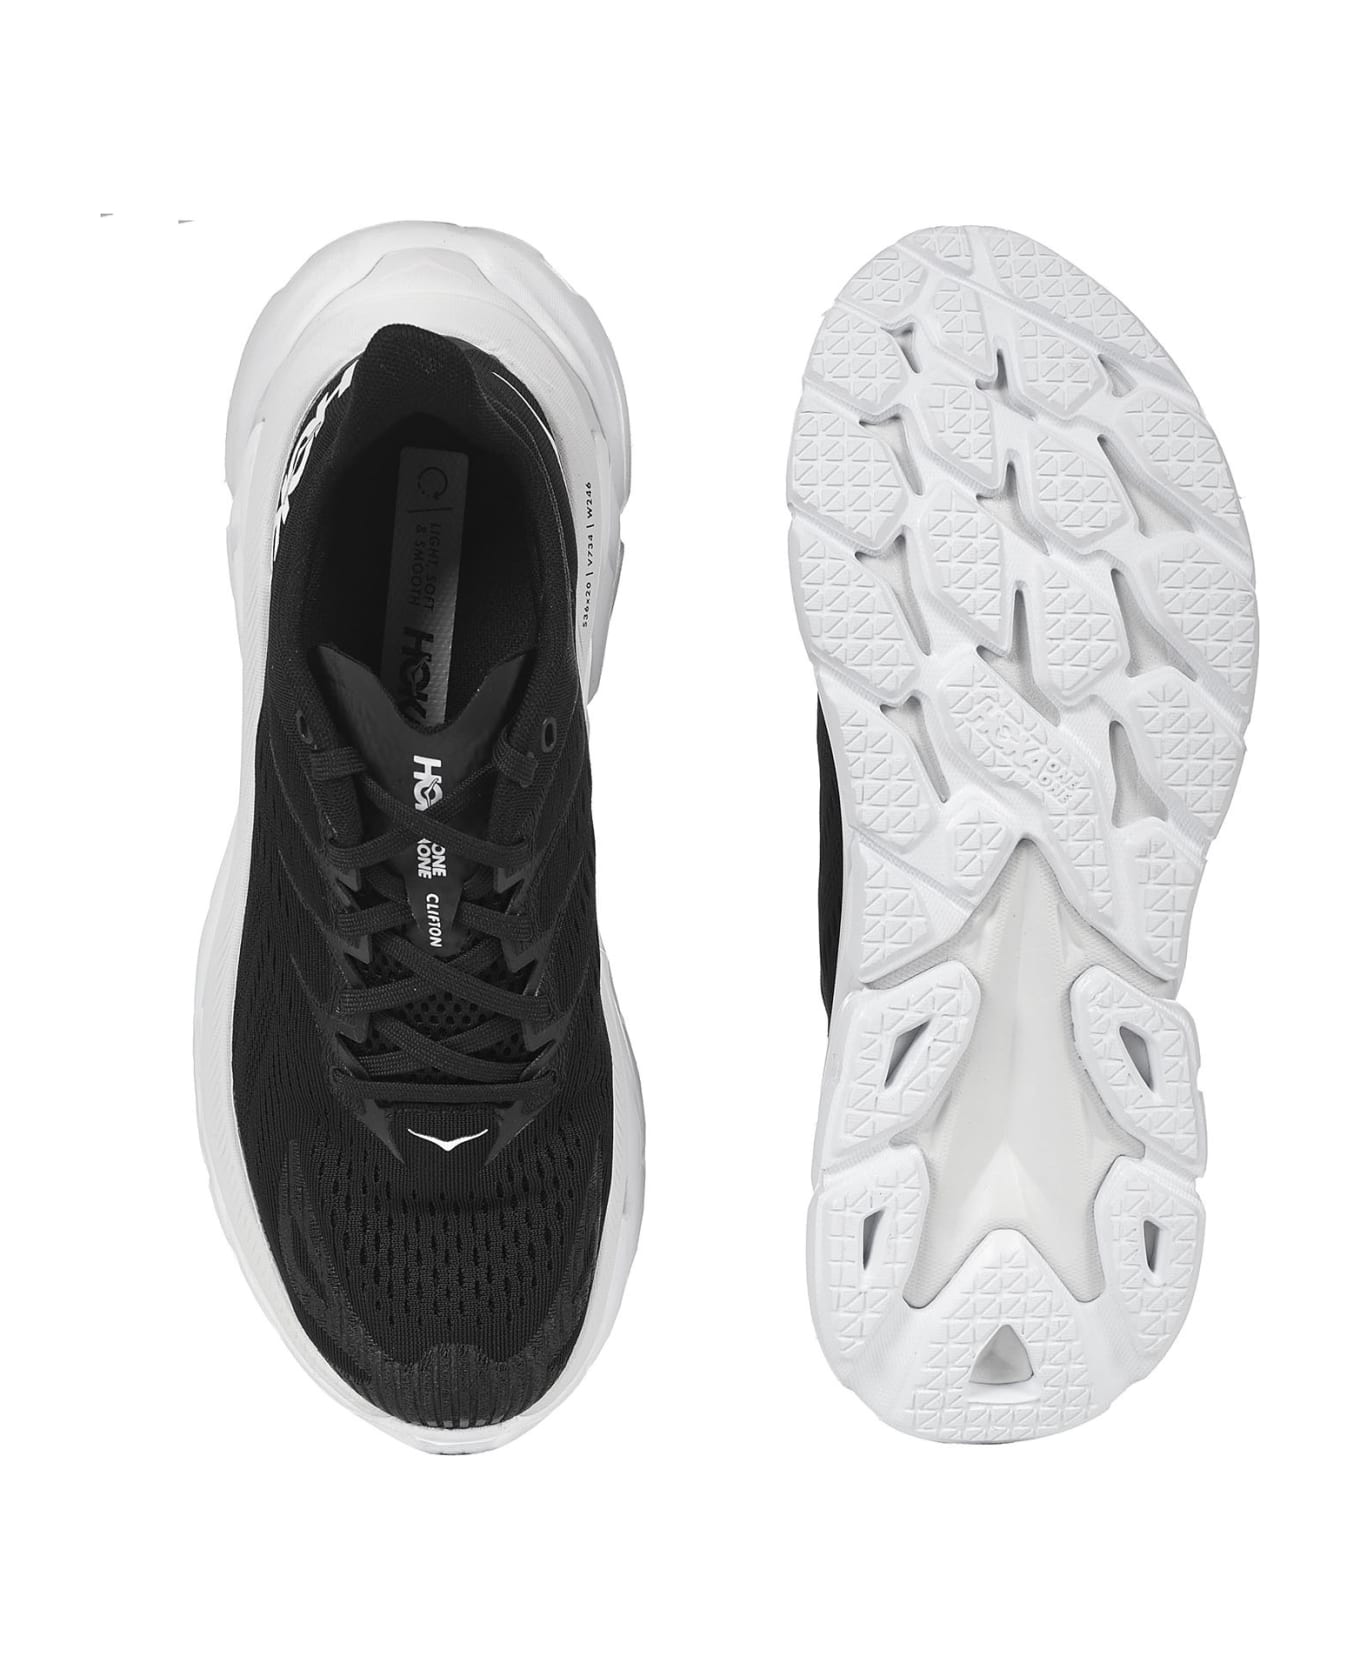 Hoka One One Clifton Edge Sneakers - Black